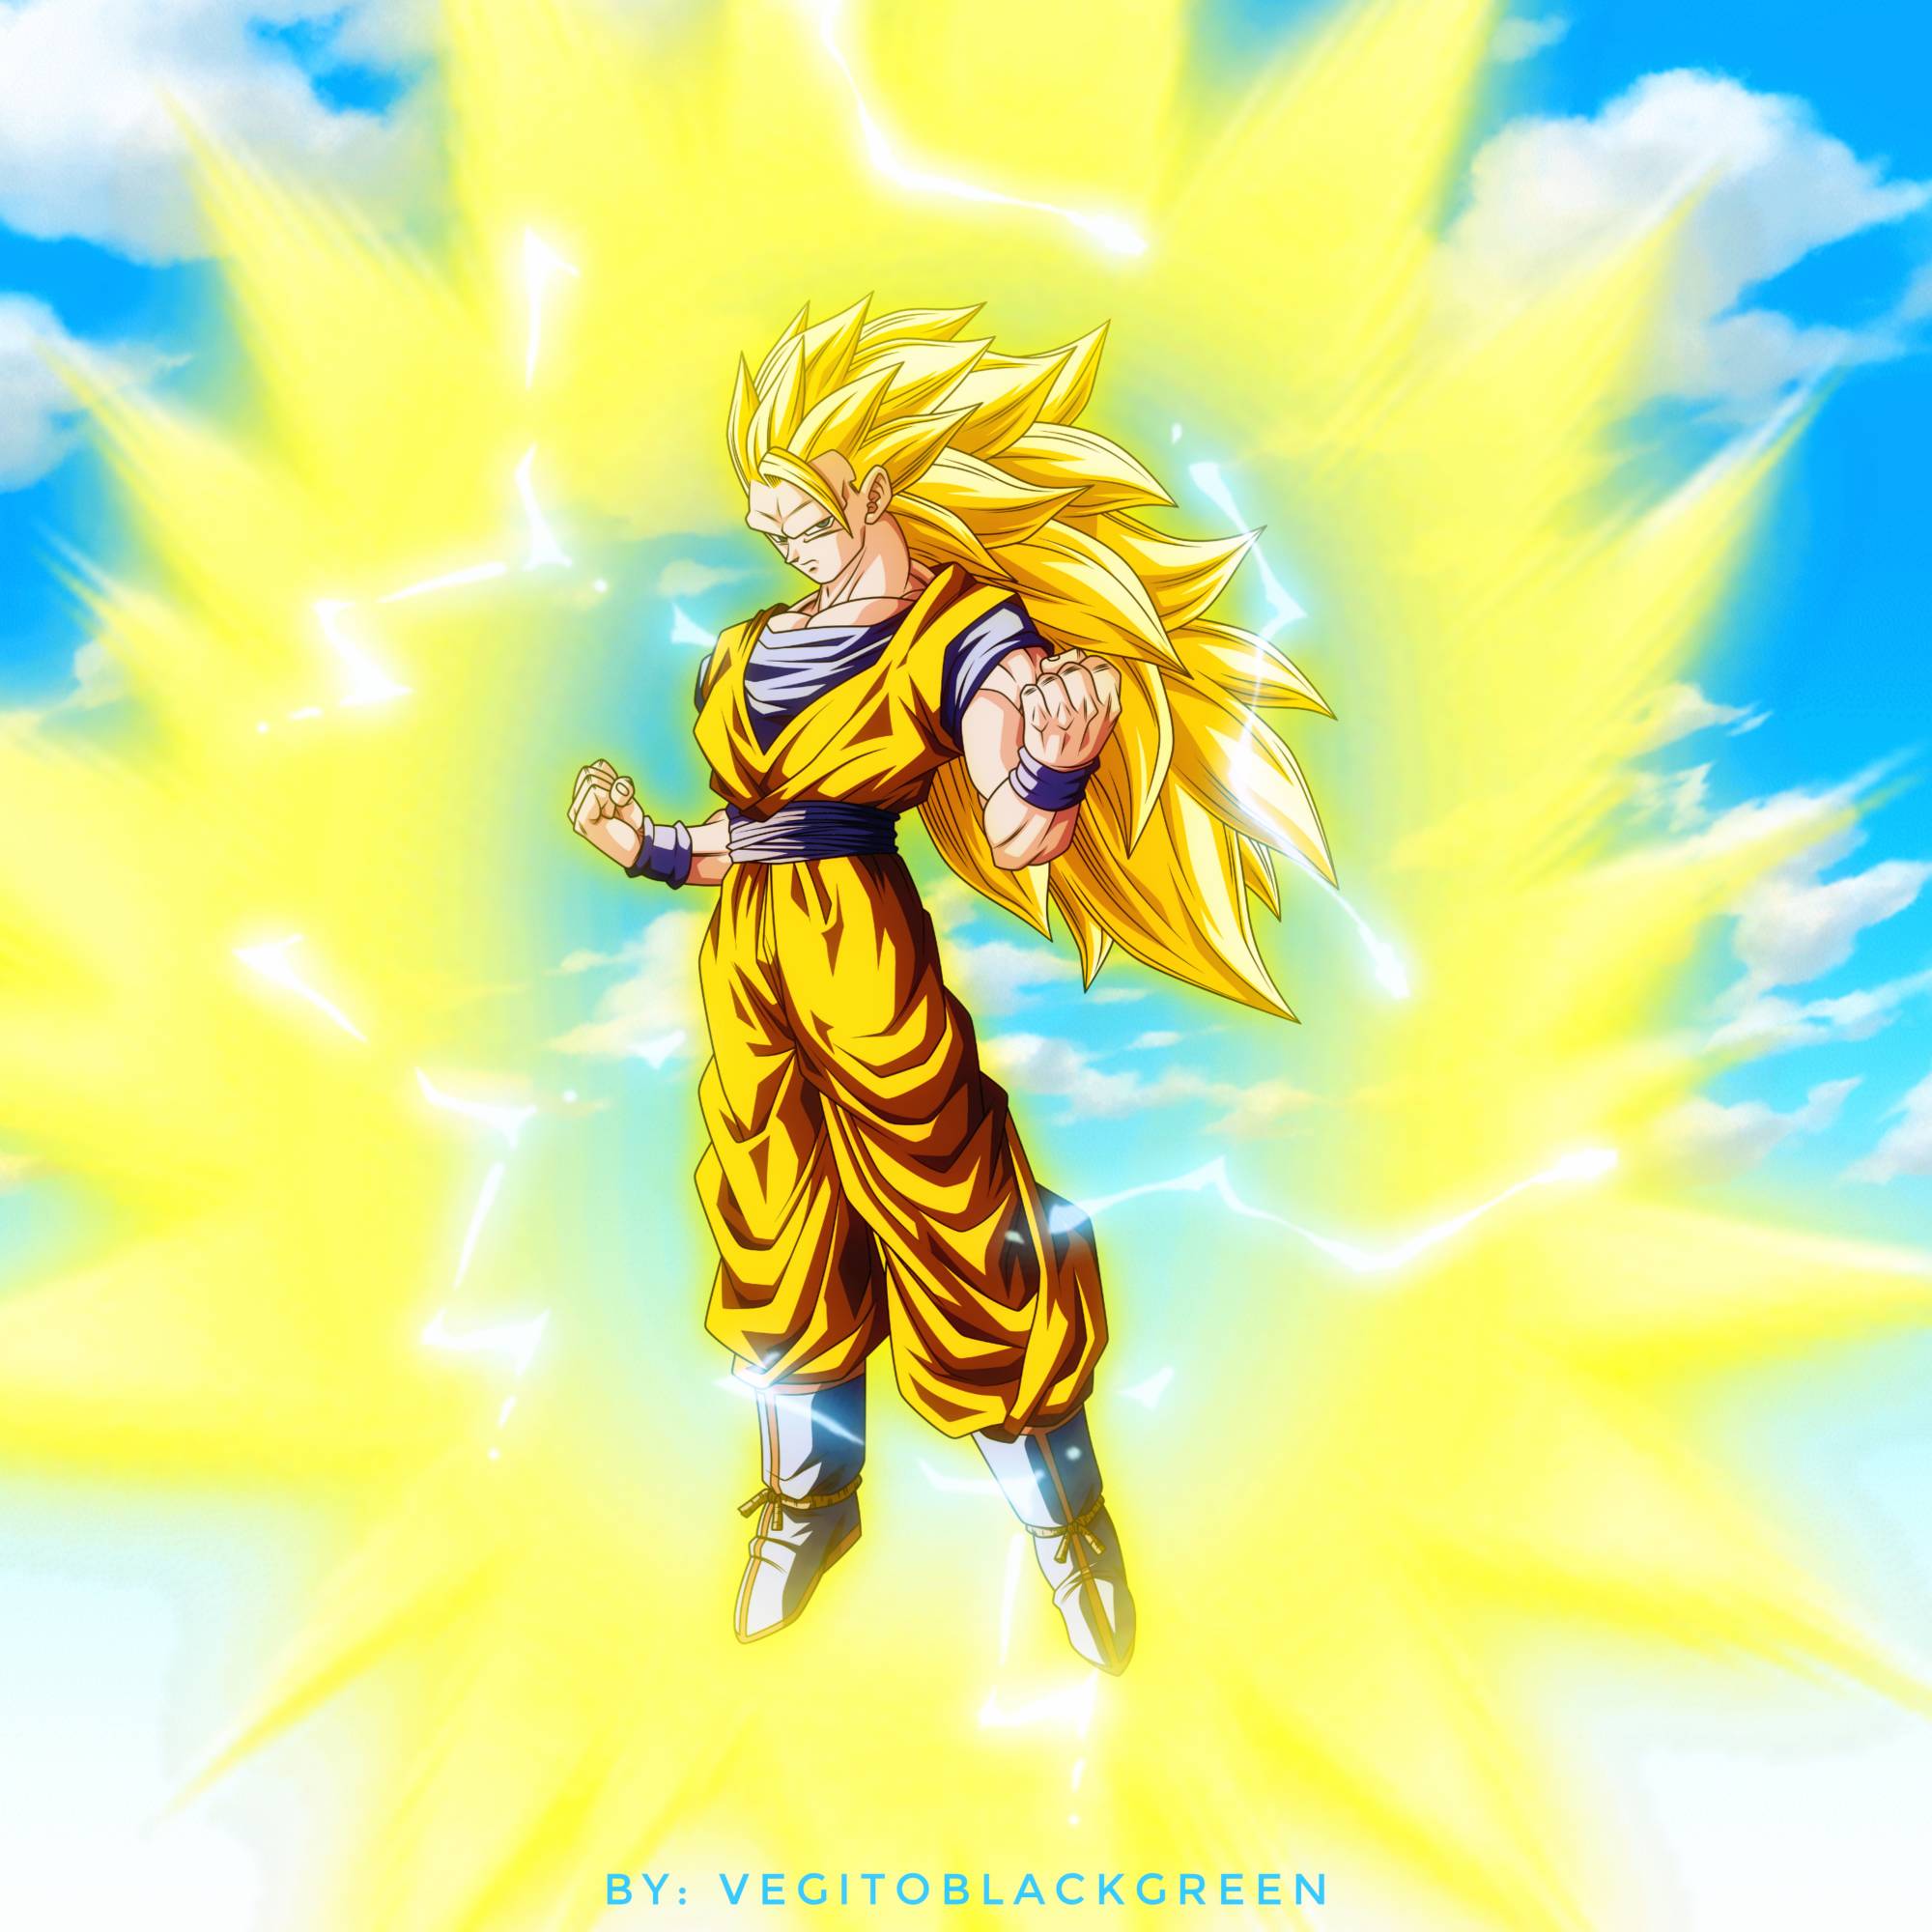 Super Saiyan 3 Goku with aura V2 by vegitoblackgreen on DeviantArt